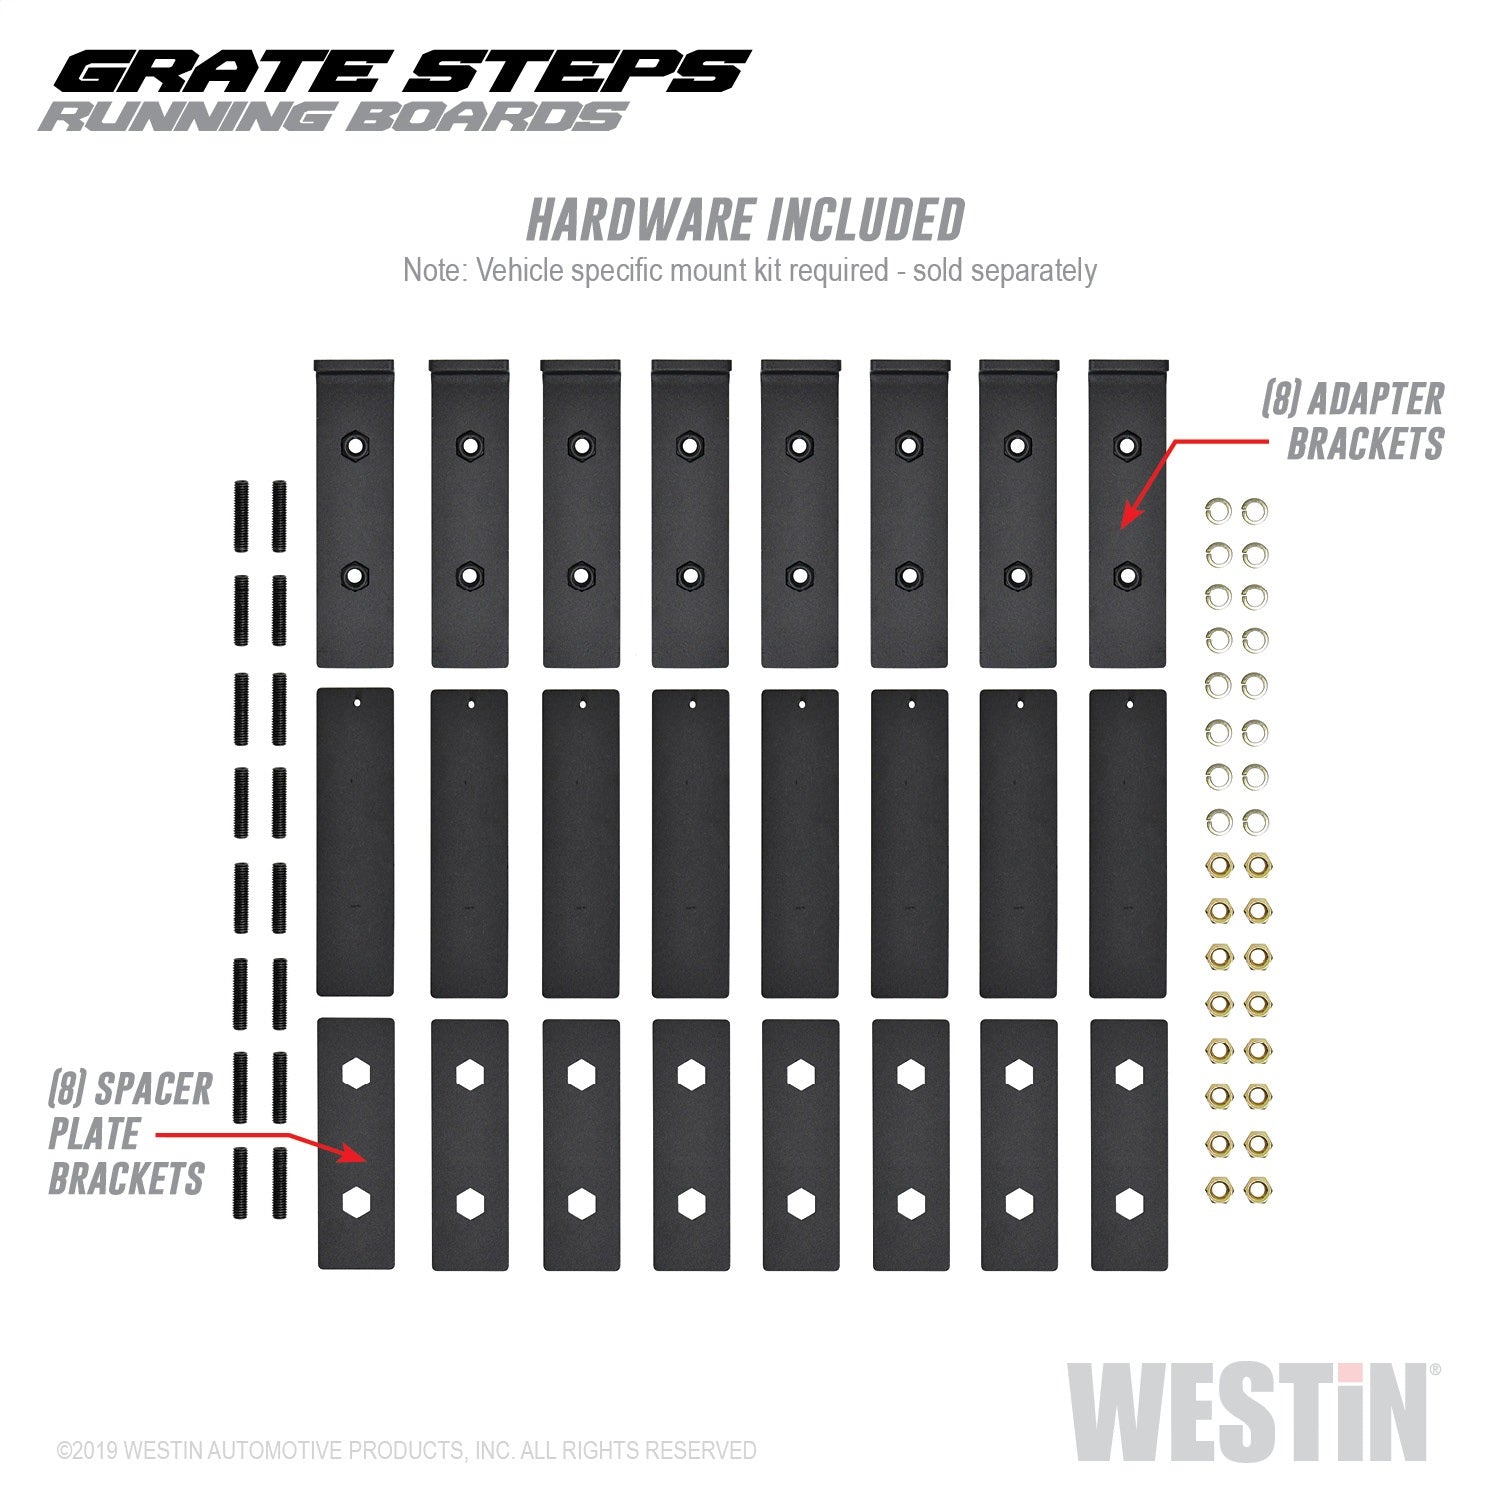 Westin 27-74755 Grate Steps Running Boards